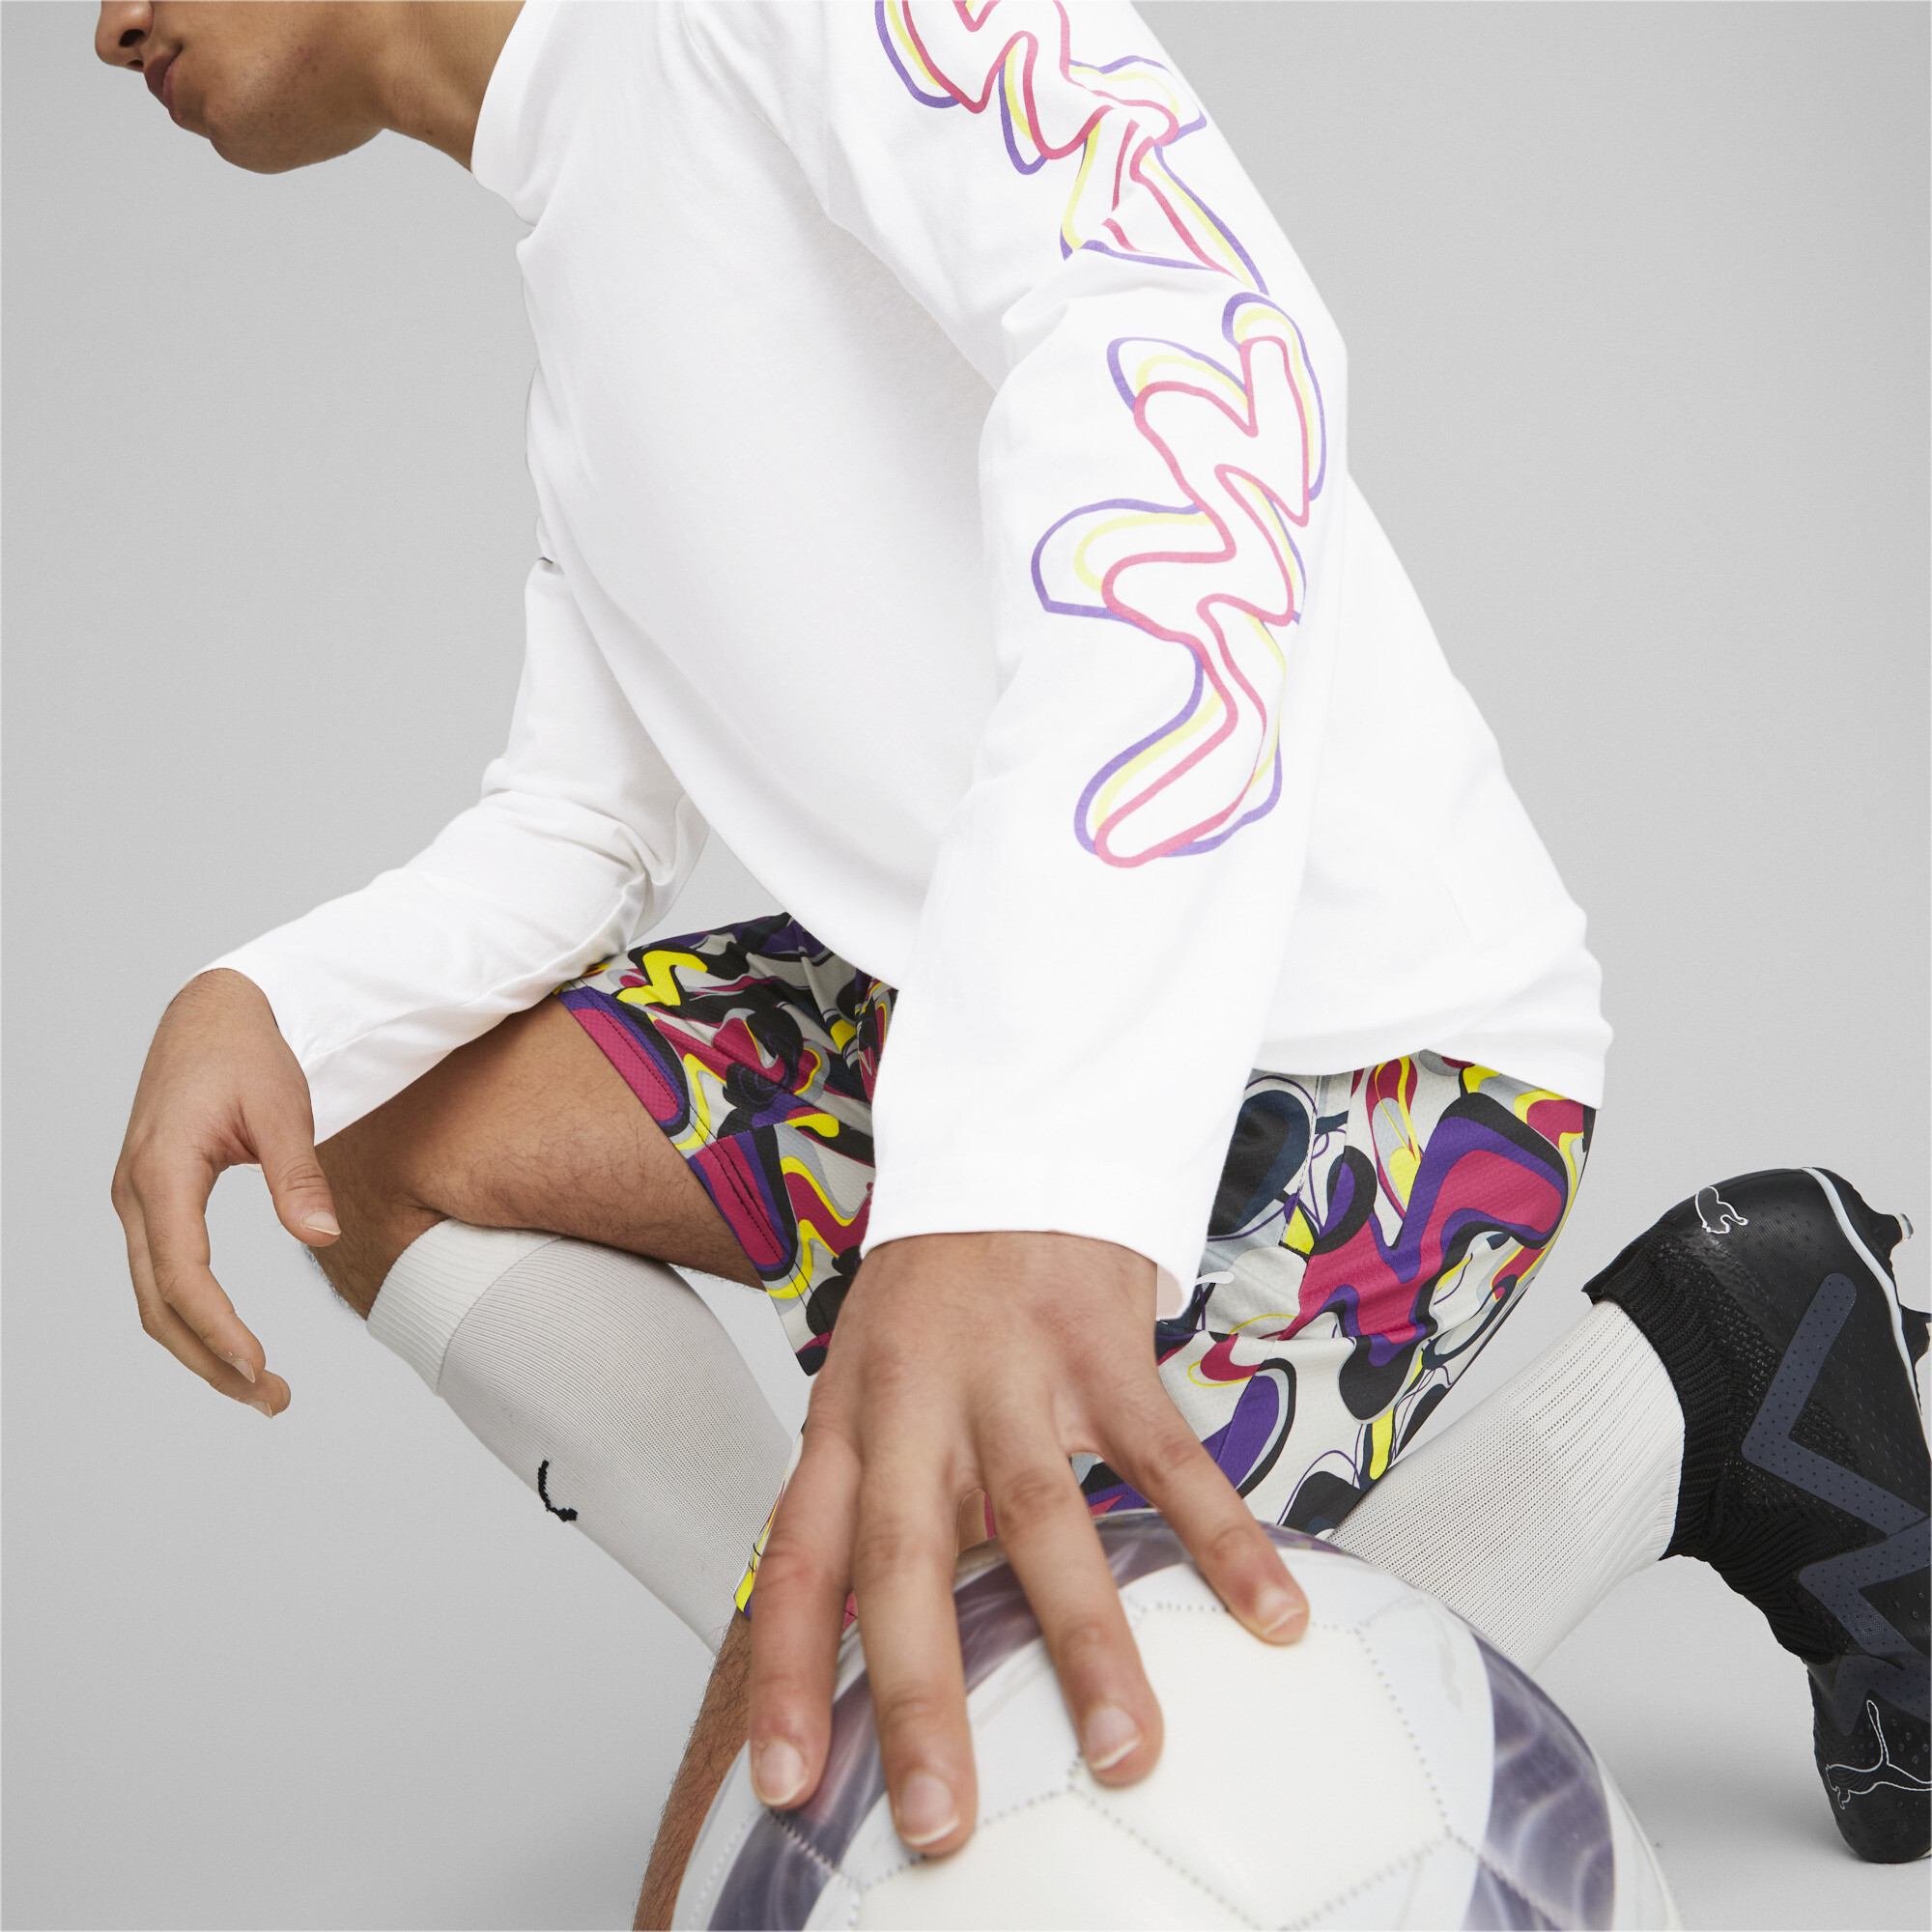 Men's Puma Neymar Jr Creativity Long Sleeve T-Shirt, White, Size 3XL, Clothing